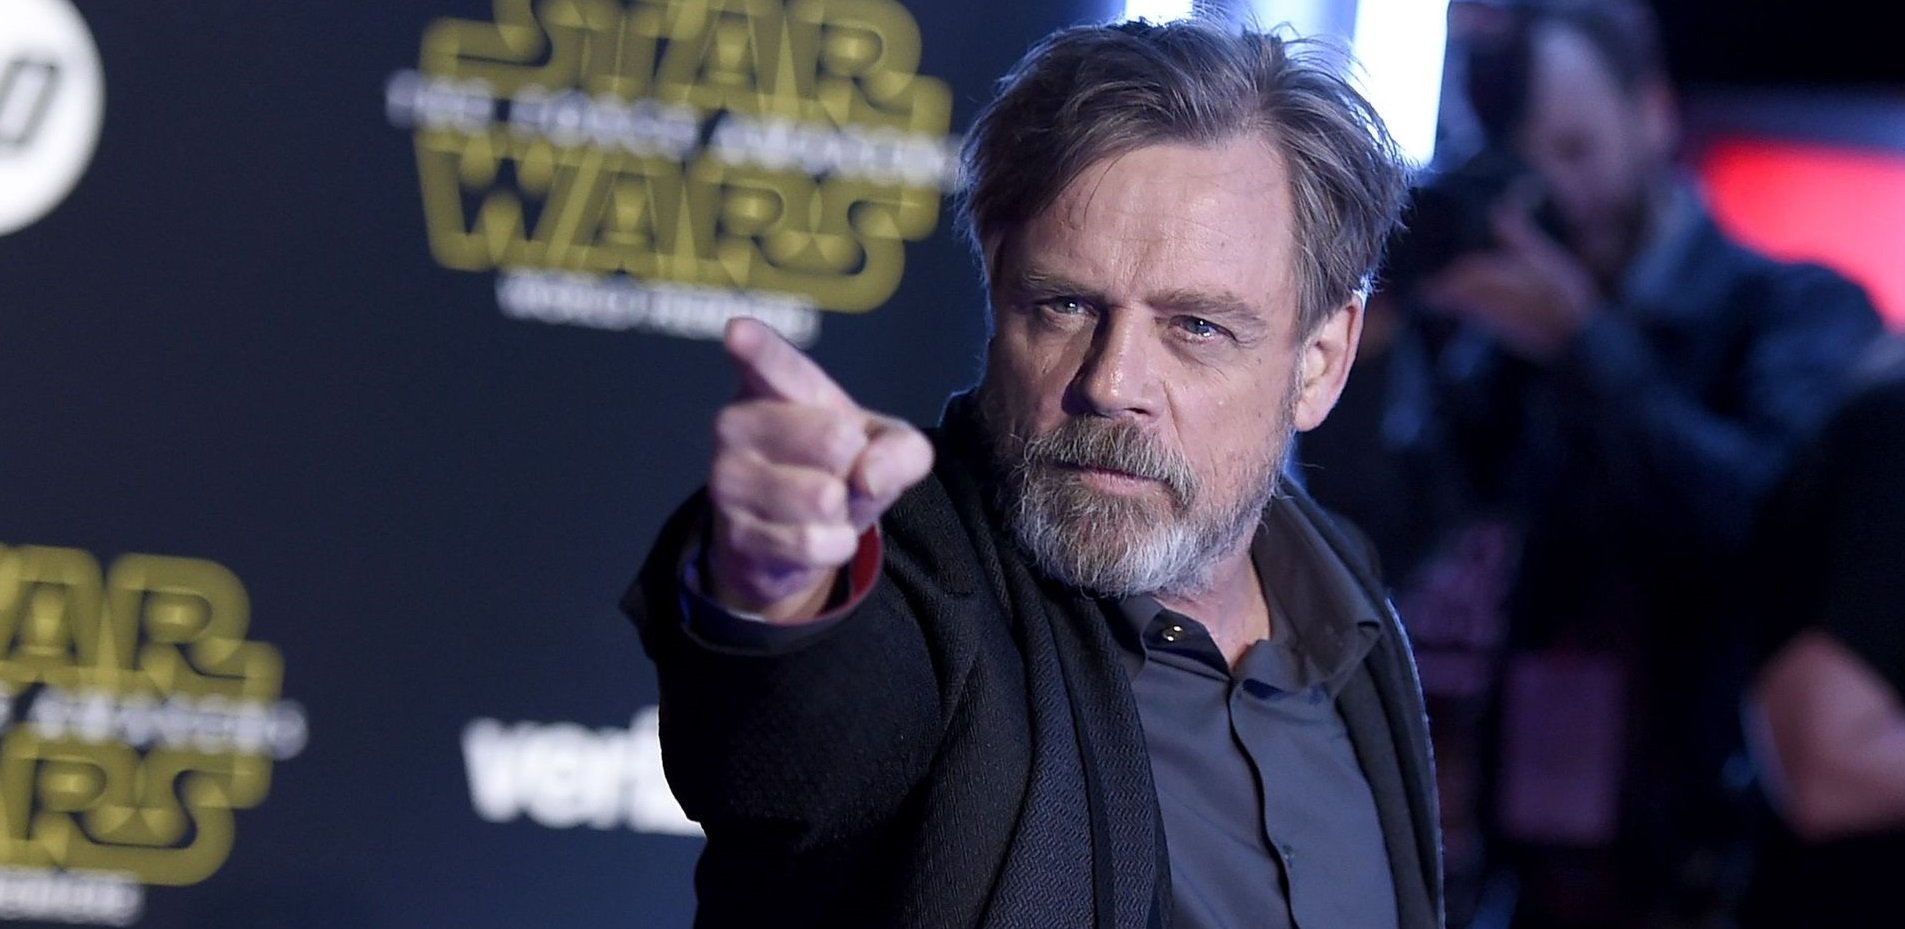 Star Wars : Quand Mark Hamill tease sur le futur de Luke Skywalker